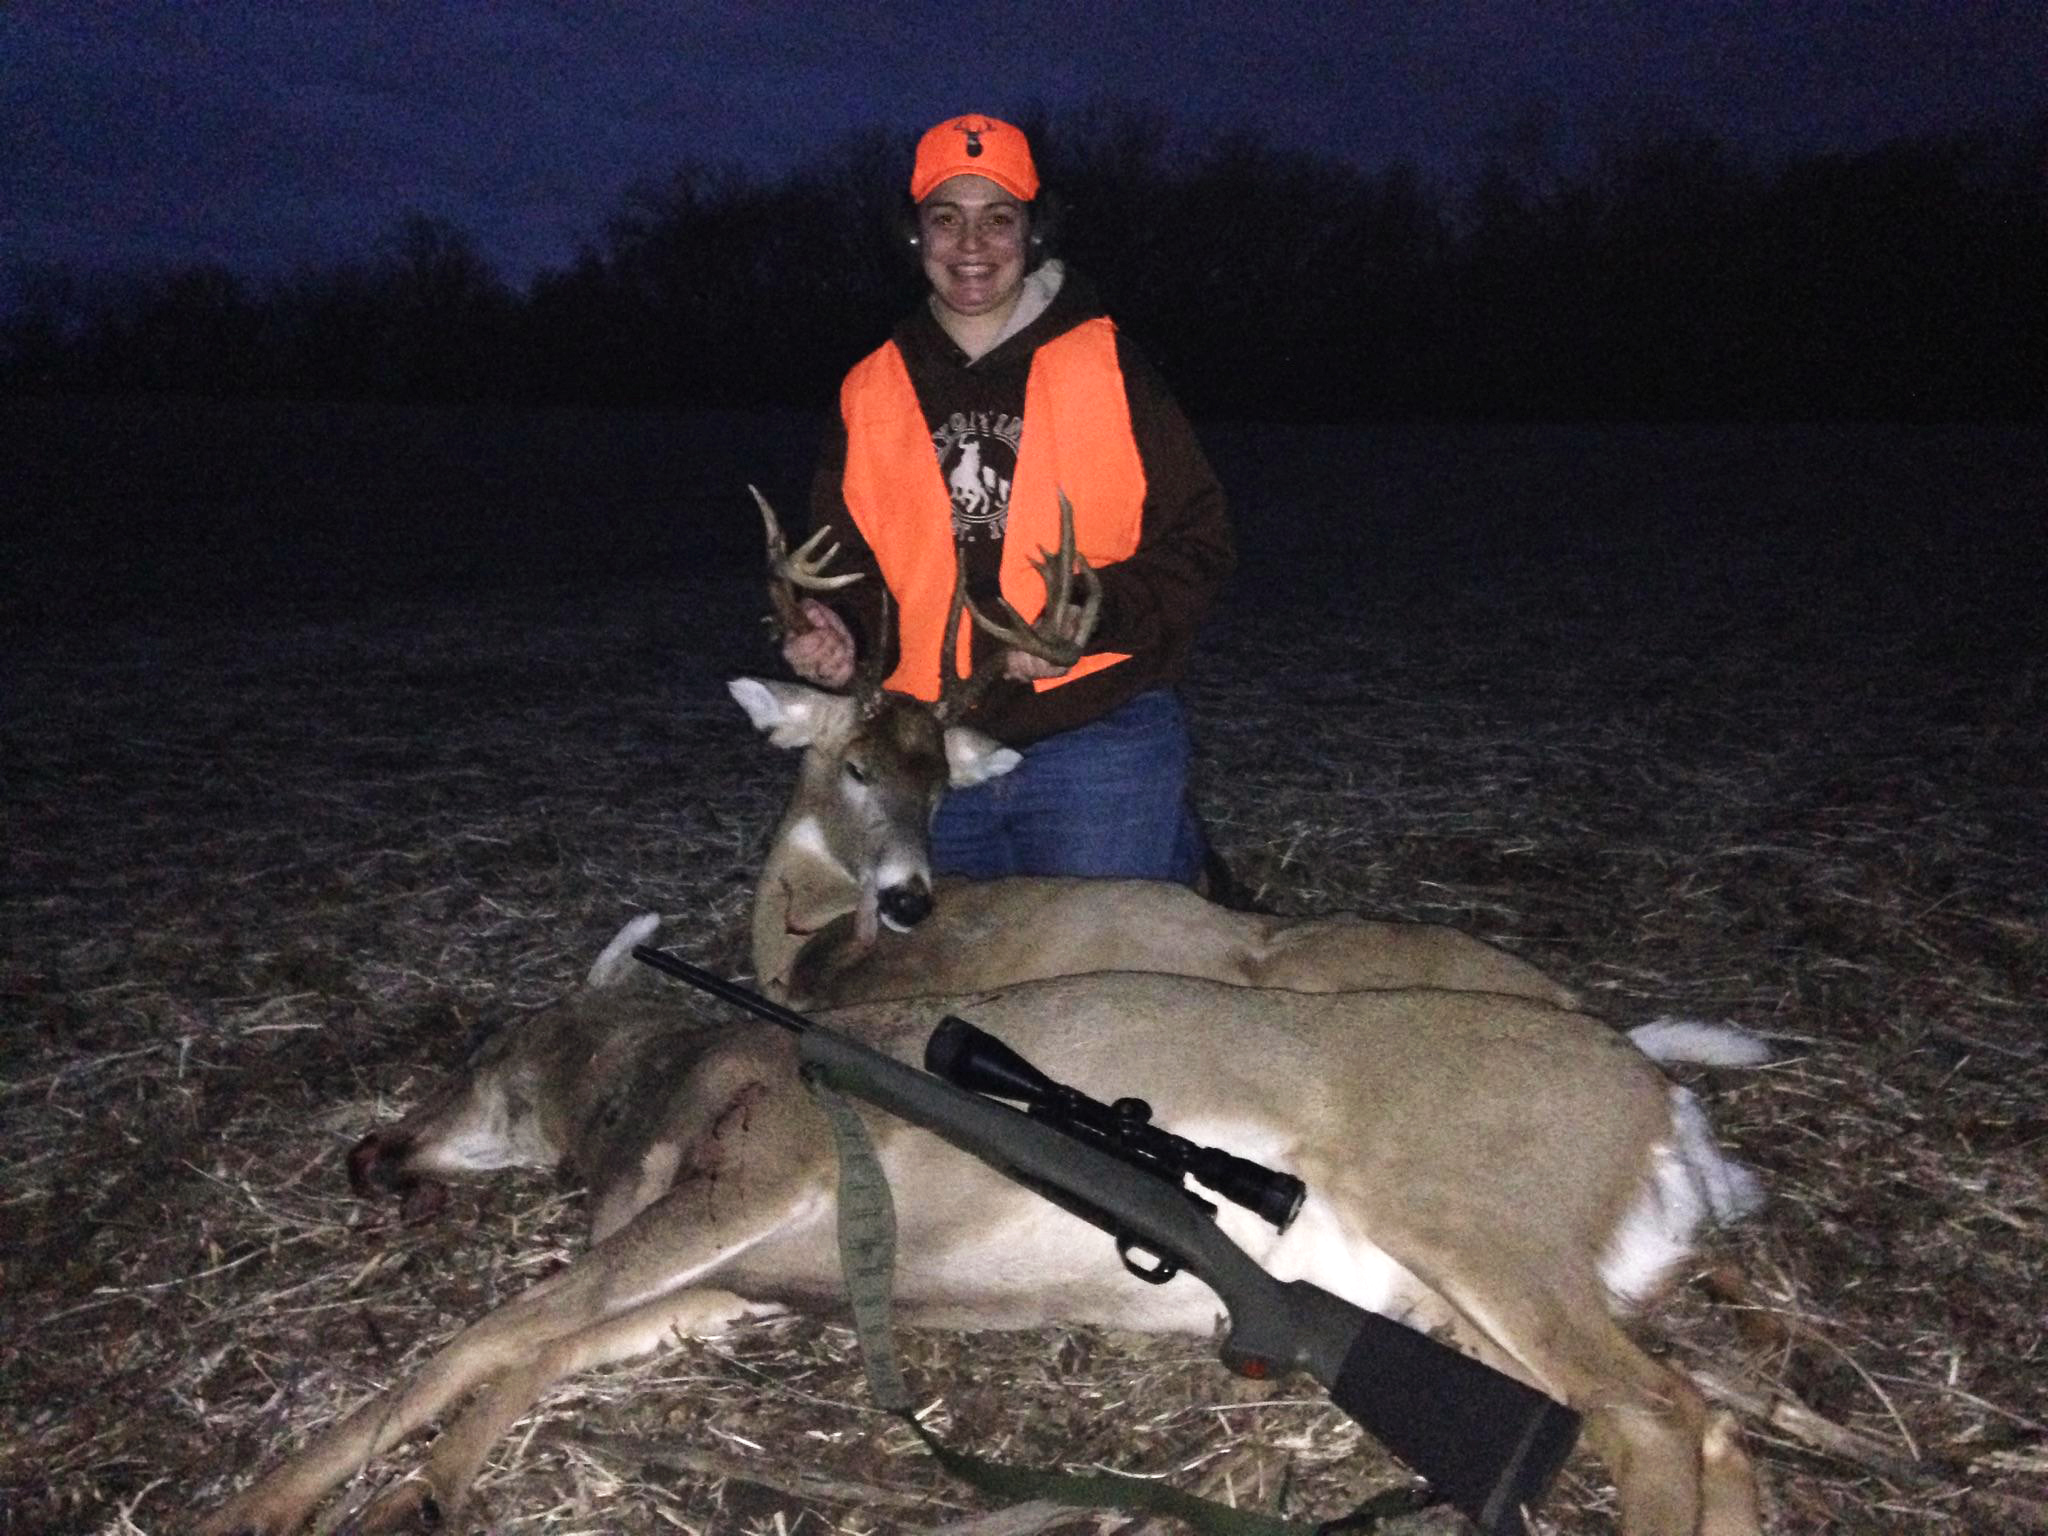 Wounded Warrior Deer Hunt Helps Healing Through Hunting